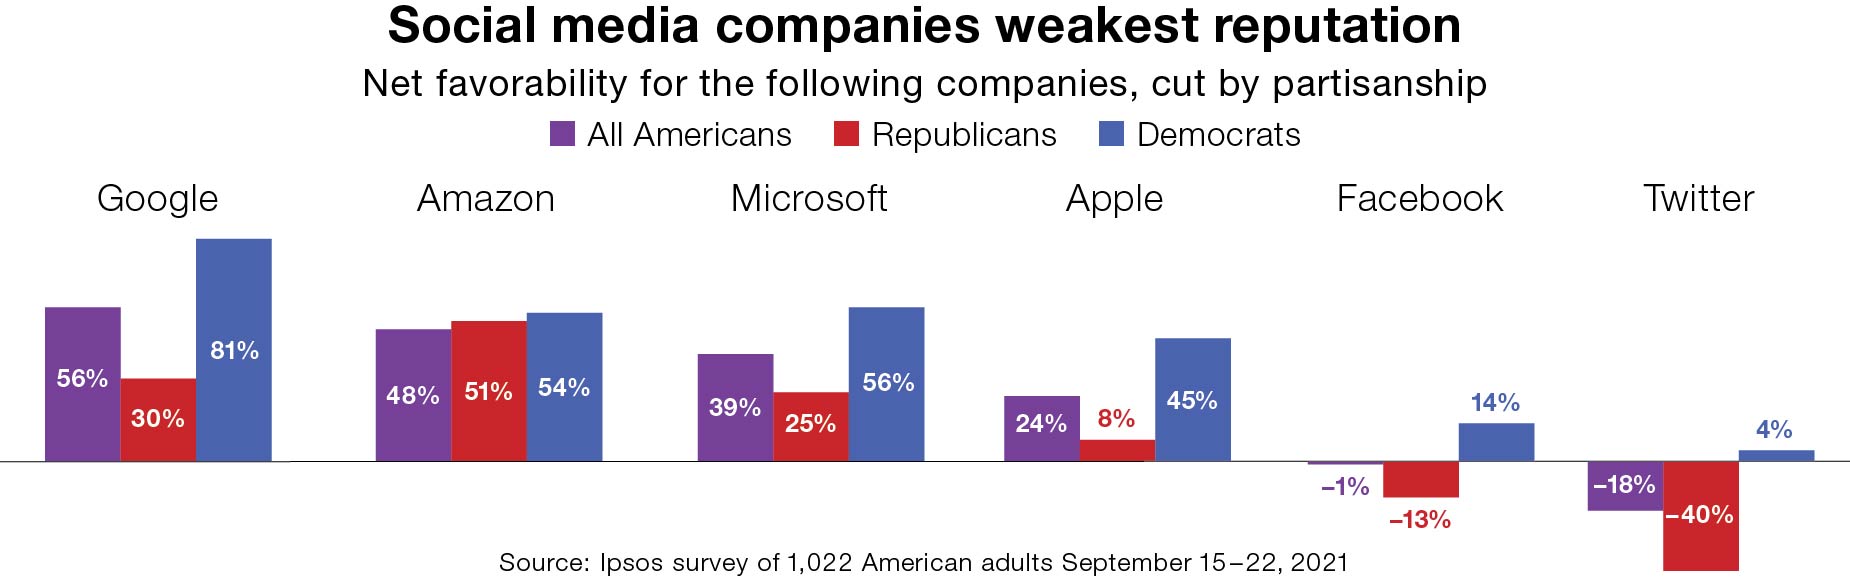 Social media companies weakest reputation